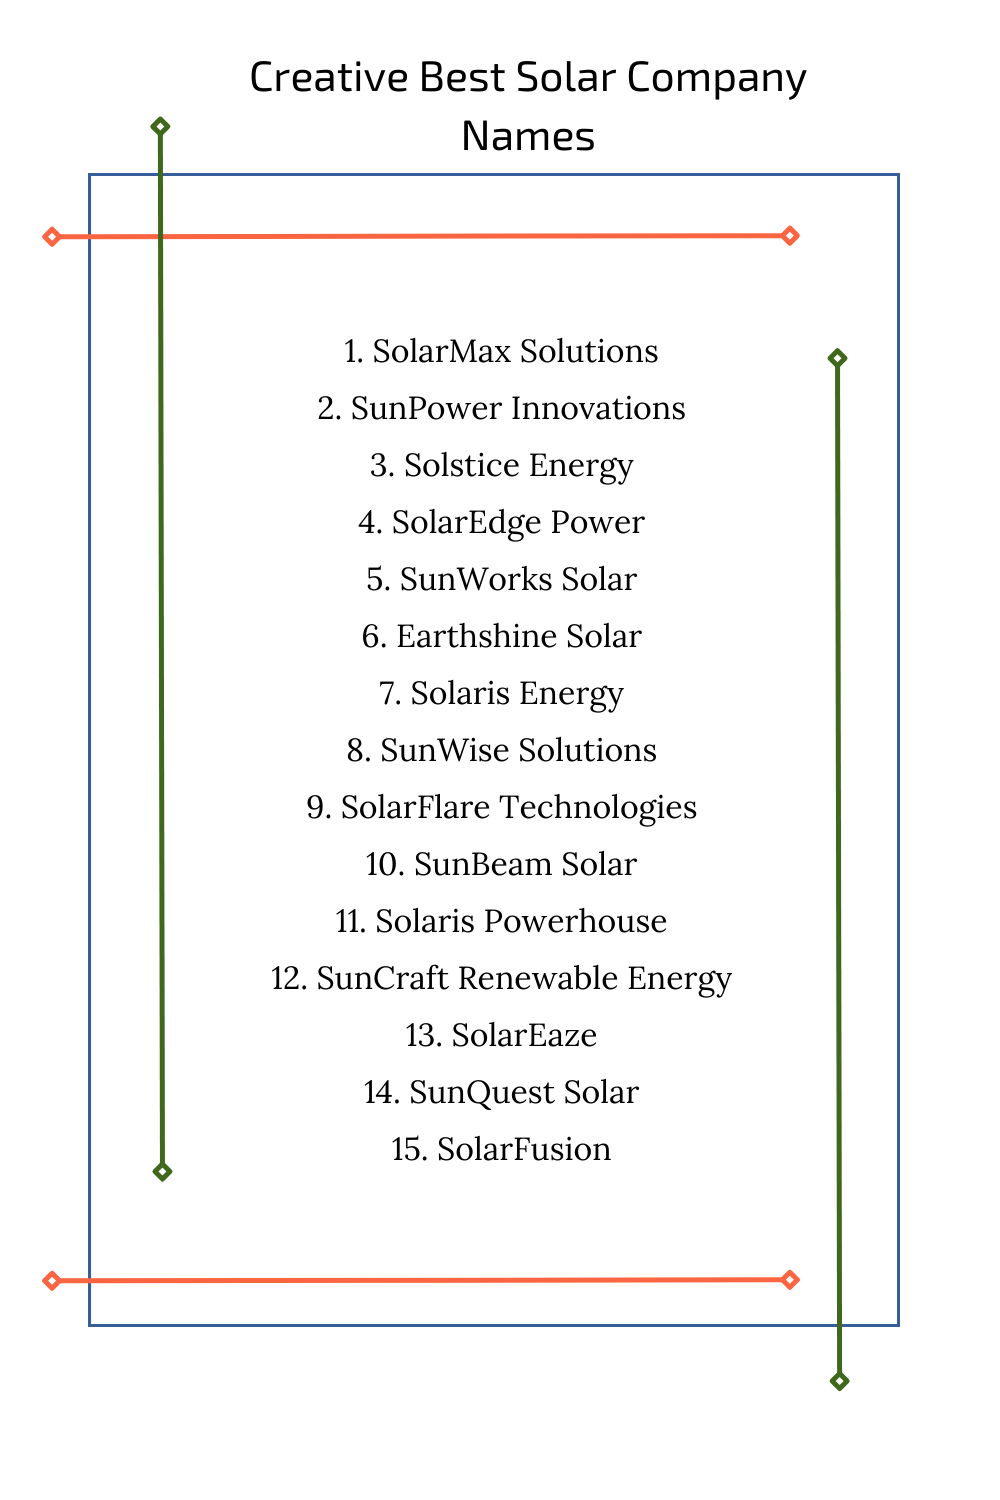 Creative Best Solar Company Names